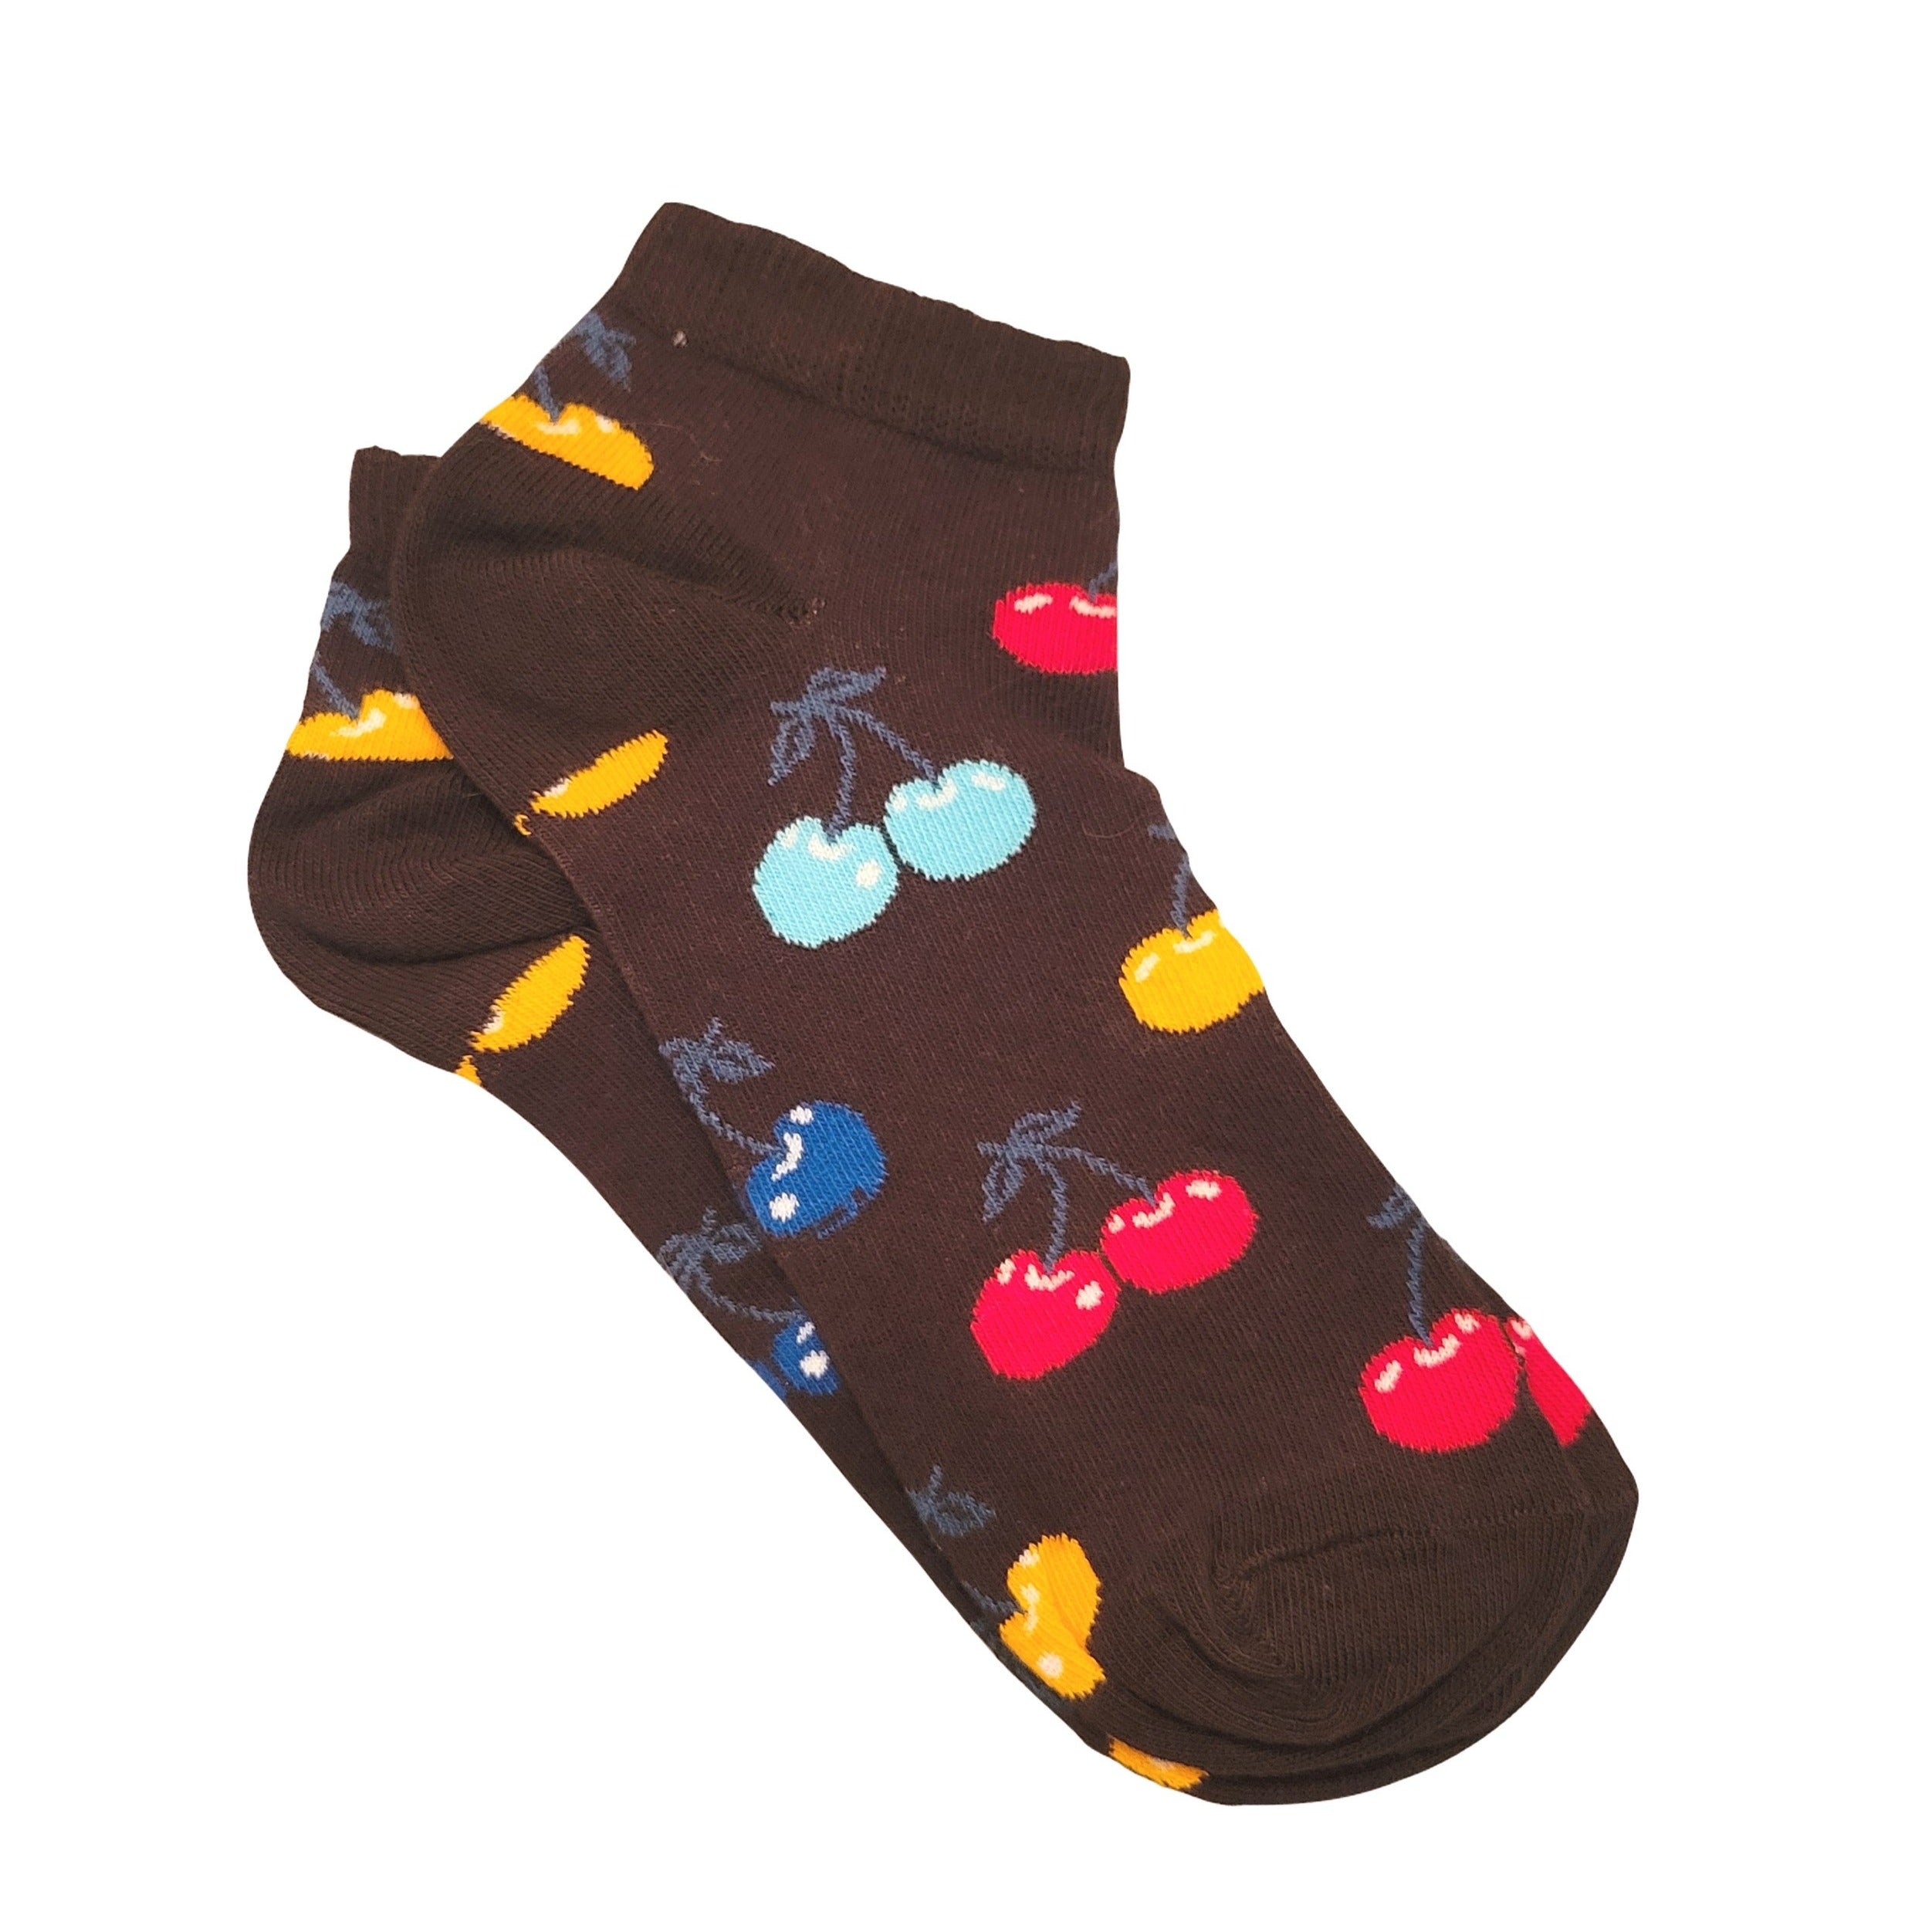 Cute Cherry Patterned Ankle Socks (Adult Medium)